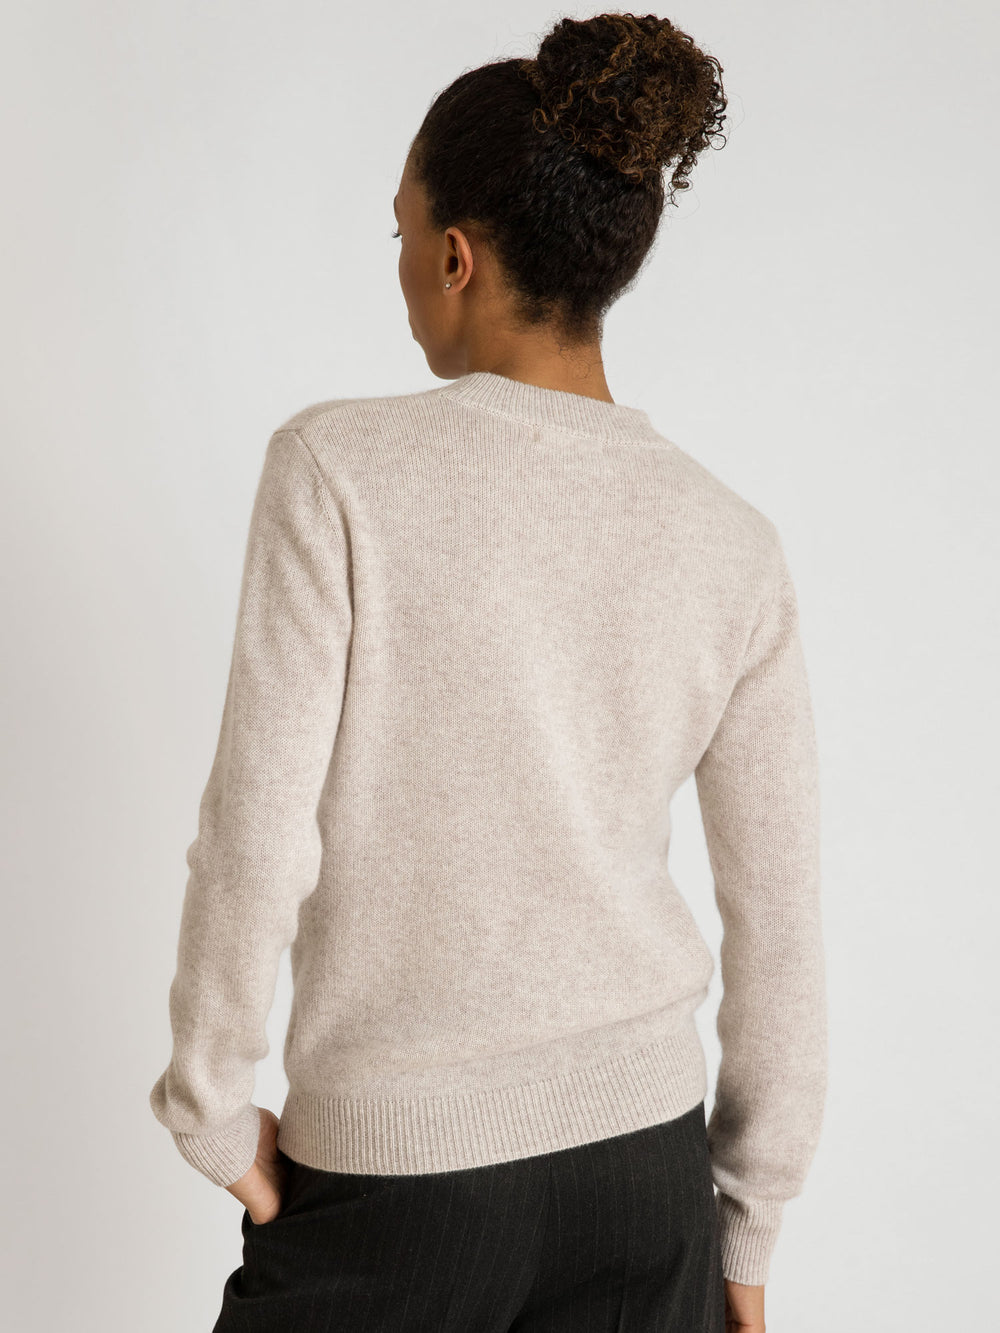 Cashmere round neck sweater Sofia Long beige 100% pure cashmere. Scandinavian design. Color: beige